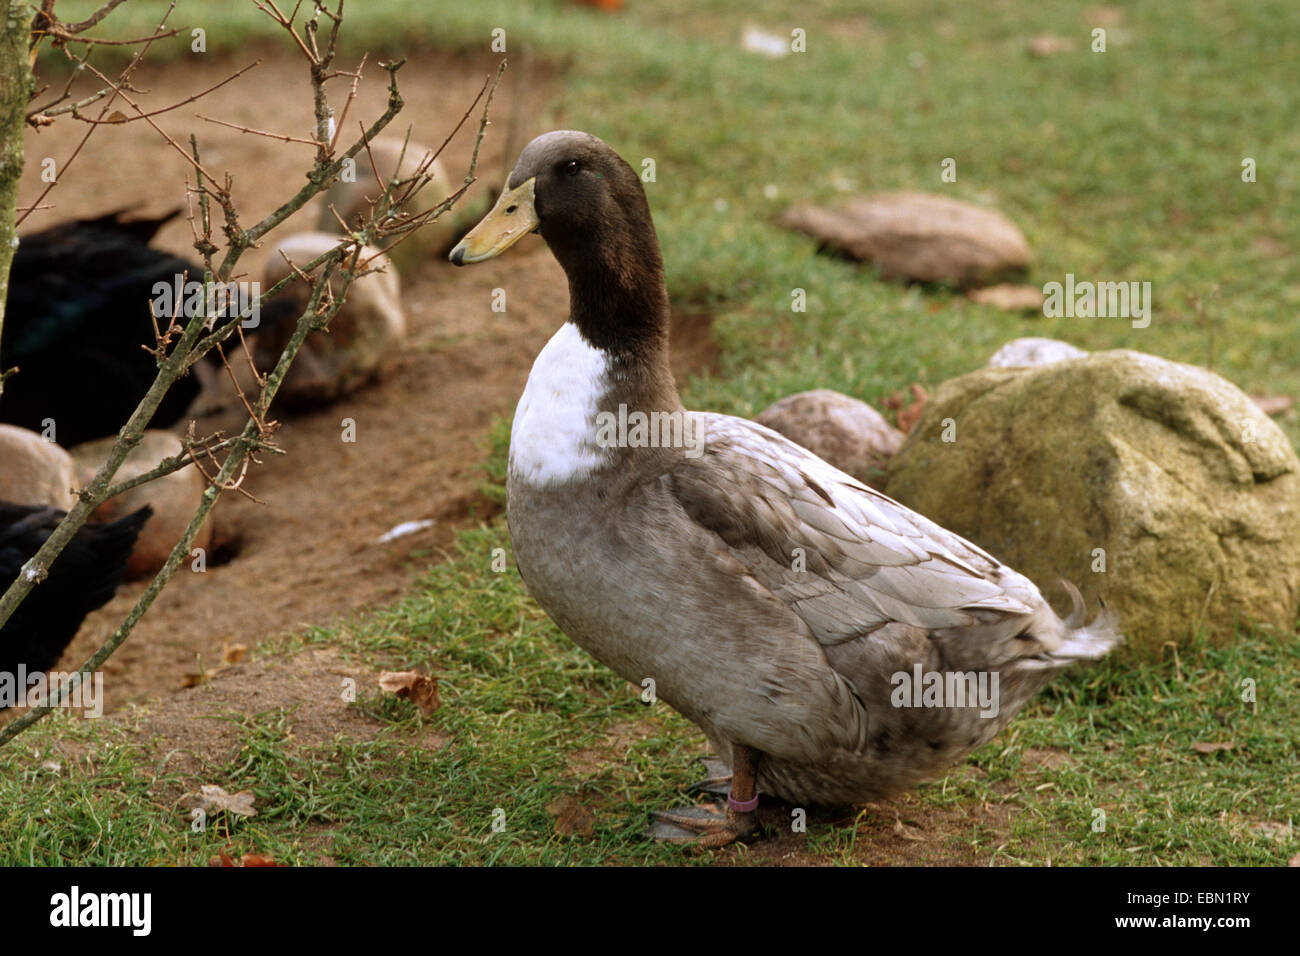 domestic duck (Anas platyrhynchos f. domestica), Rouen Clair Duck standing on lawn Stock Photo